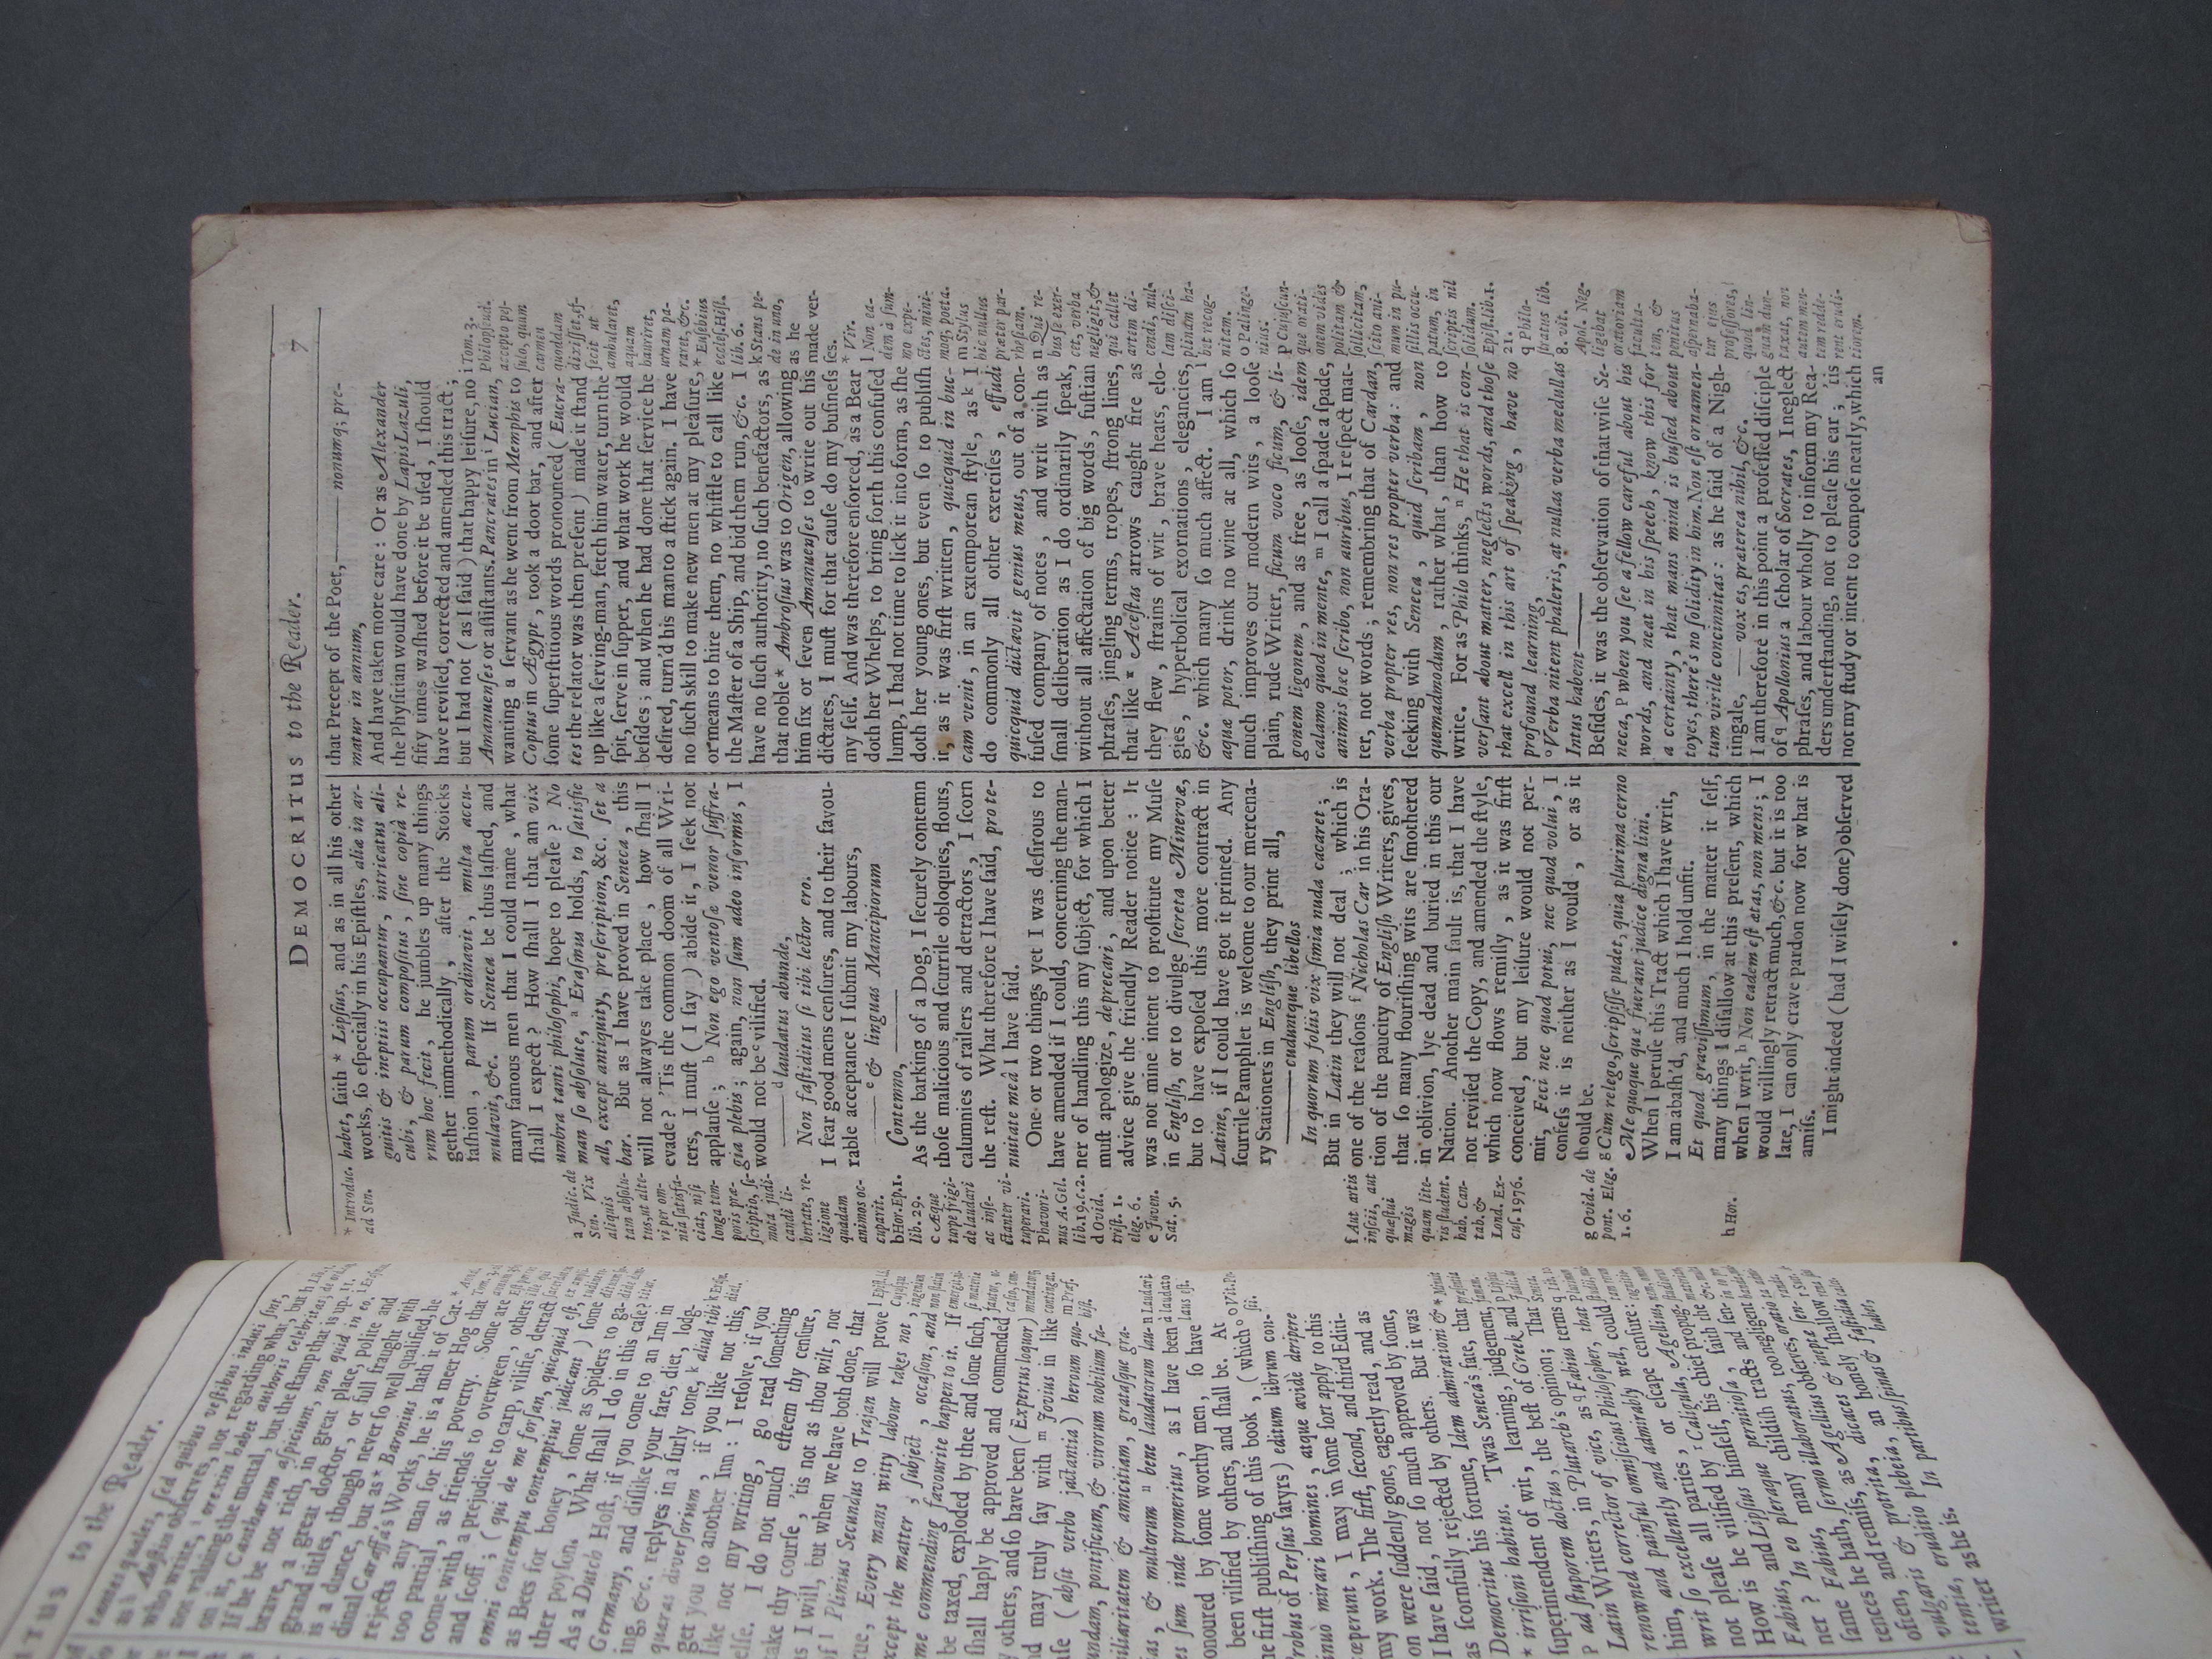 Folio B4 recto